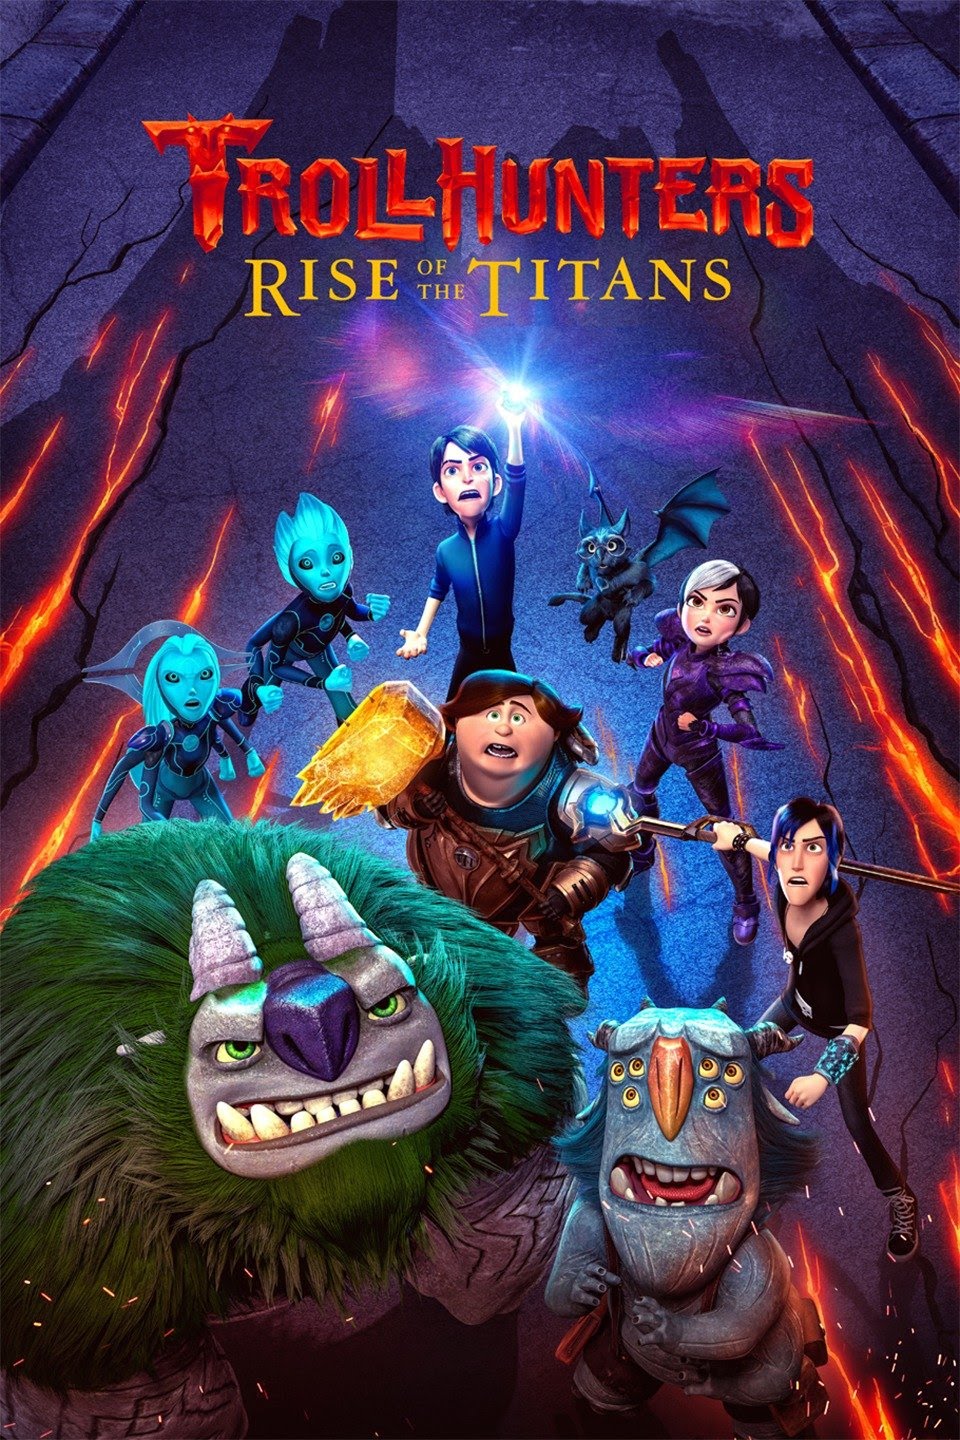 [MINI Super-HQ] Trollhunters: Rise of the Titans (2021) โทรลล์ฮันเตอร์ส: ไรส์ ออฟ เดอะ ไททันส์ [1080p] [NETFLIX] [พากย์ไทย 5.1 + เสียงอังกฤษ 5.1] [บรรยายไทย + อังกฤษ] [เสียงไทย + ซับไทย] [USERLOAD]